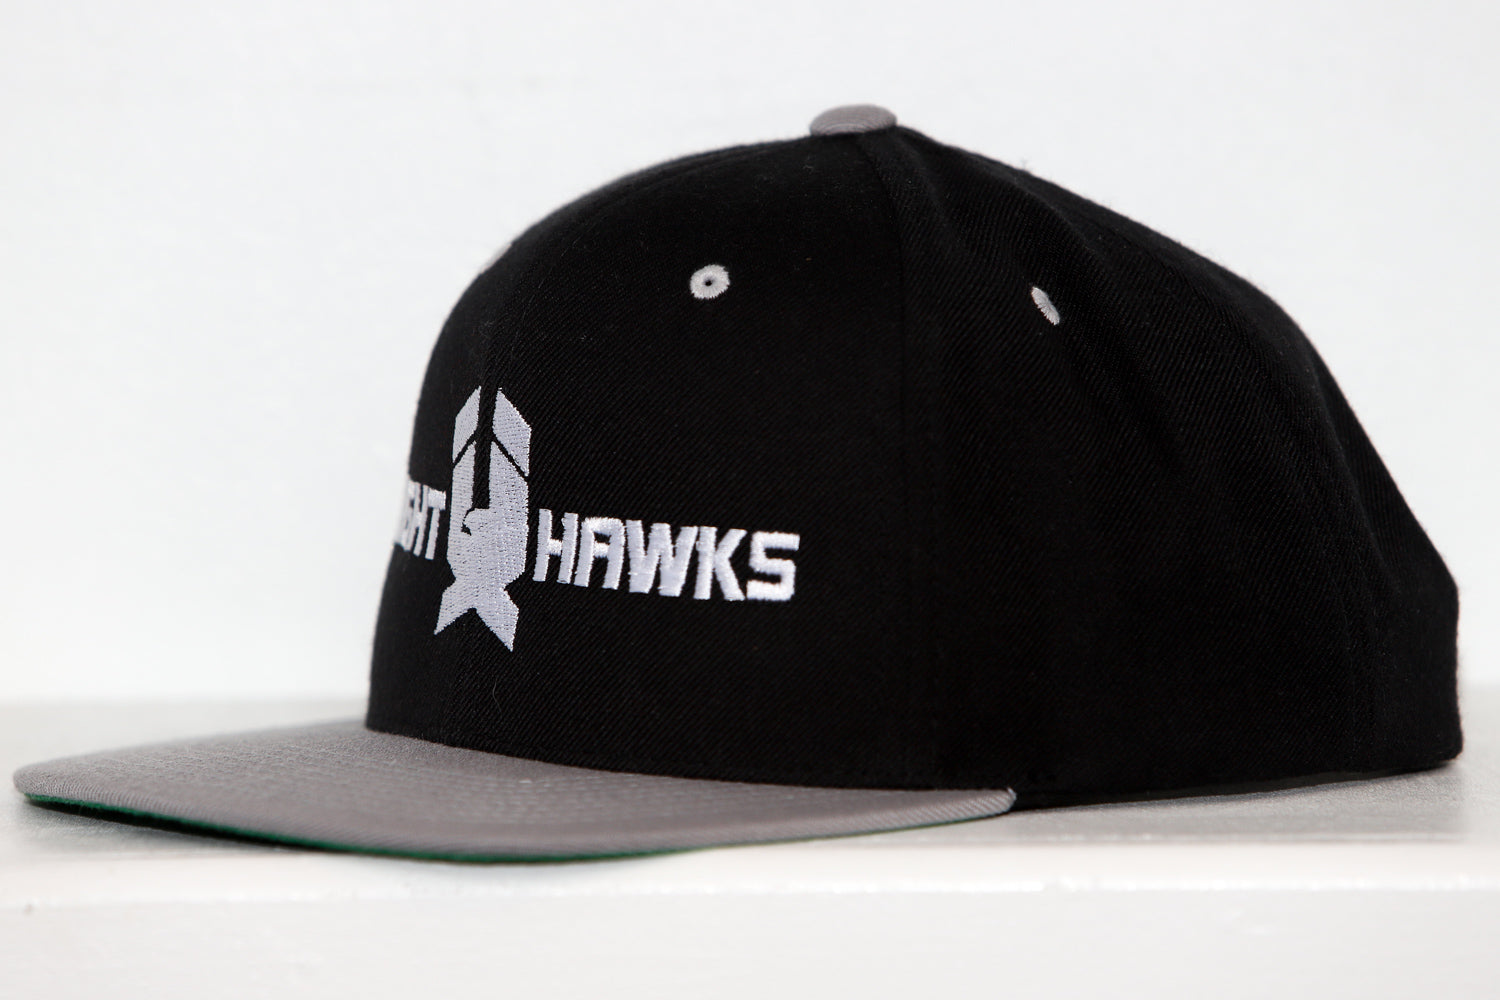 New Haven Nighthawks Hat (Snapback)